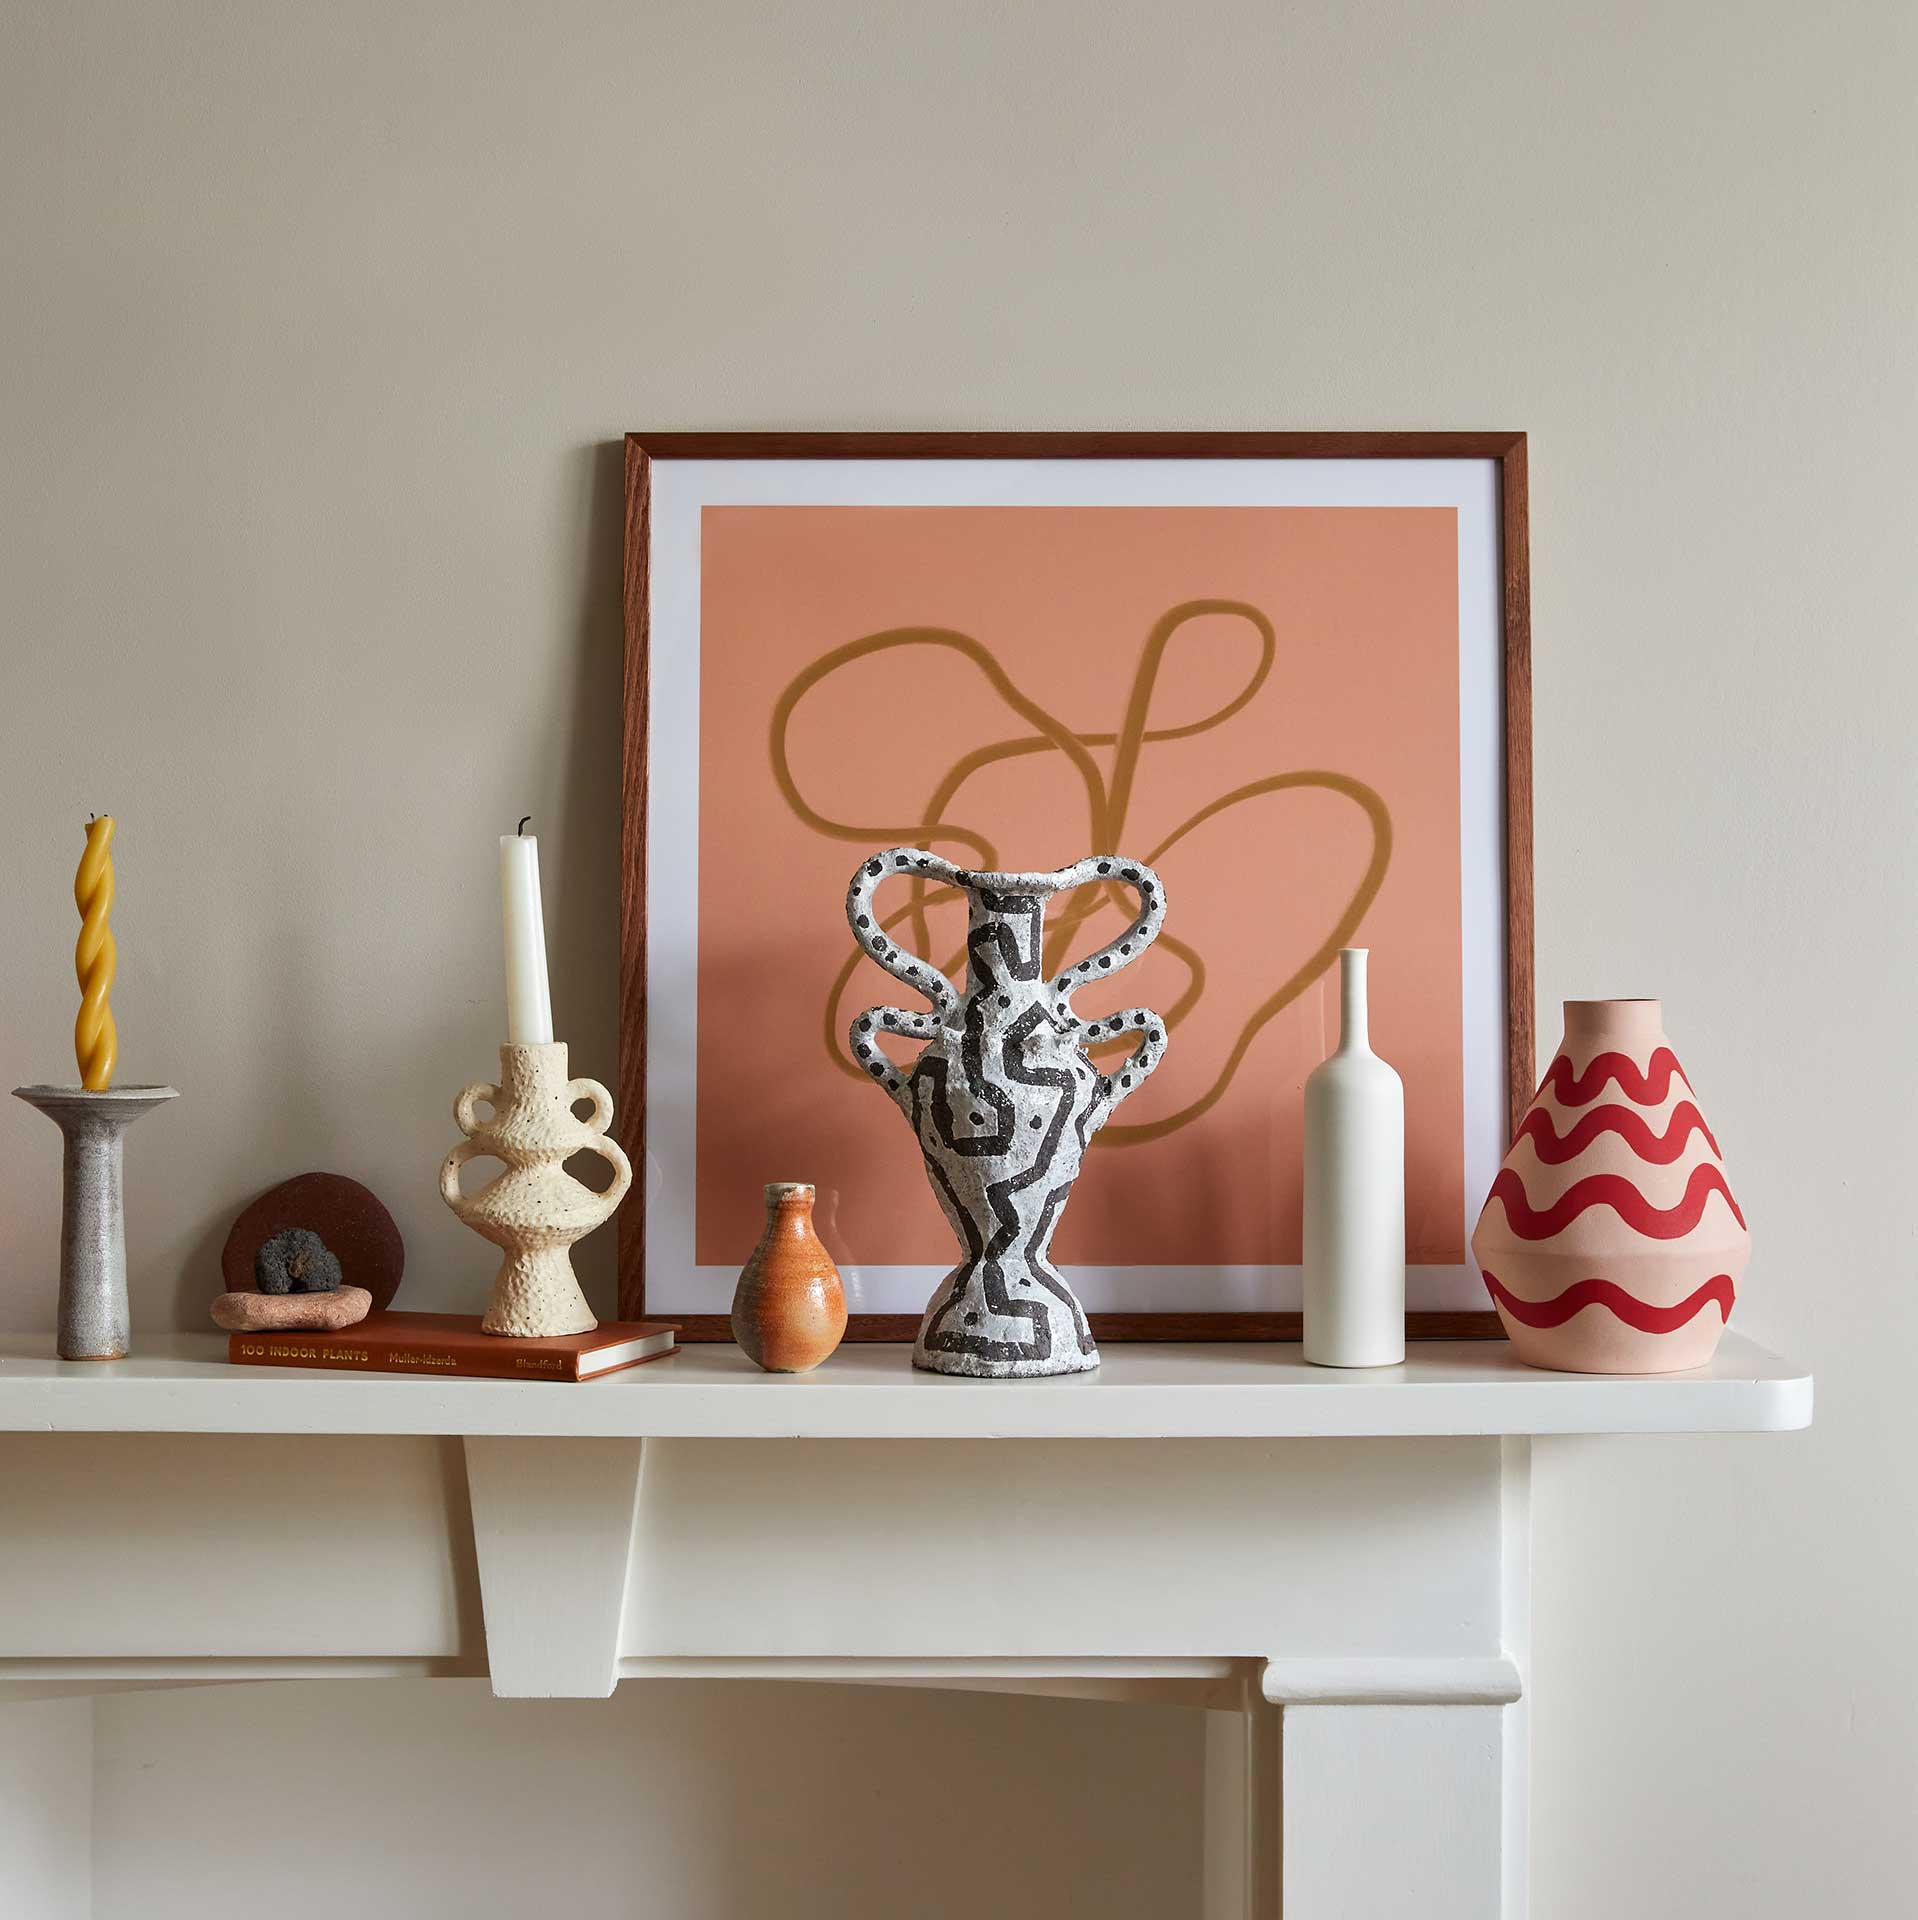 ceramics-and-art-shelf-display